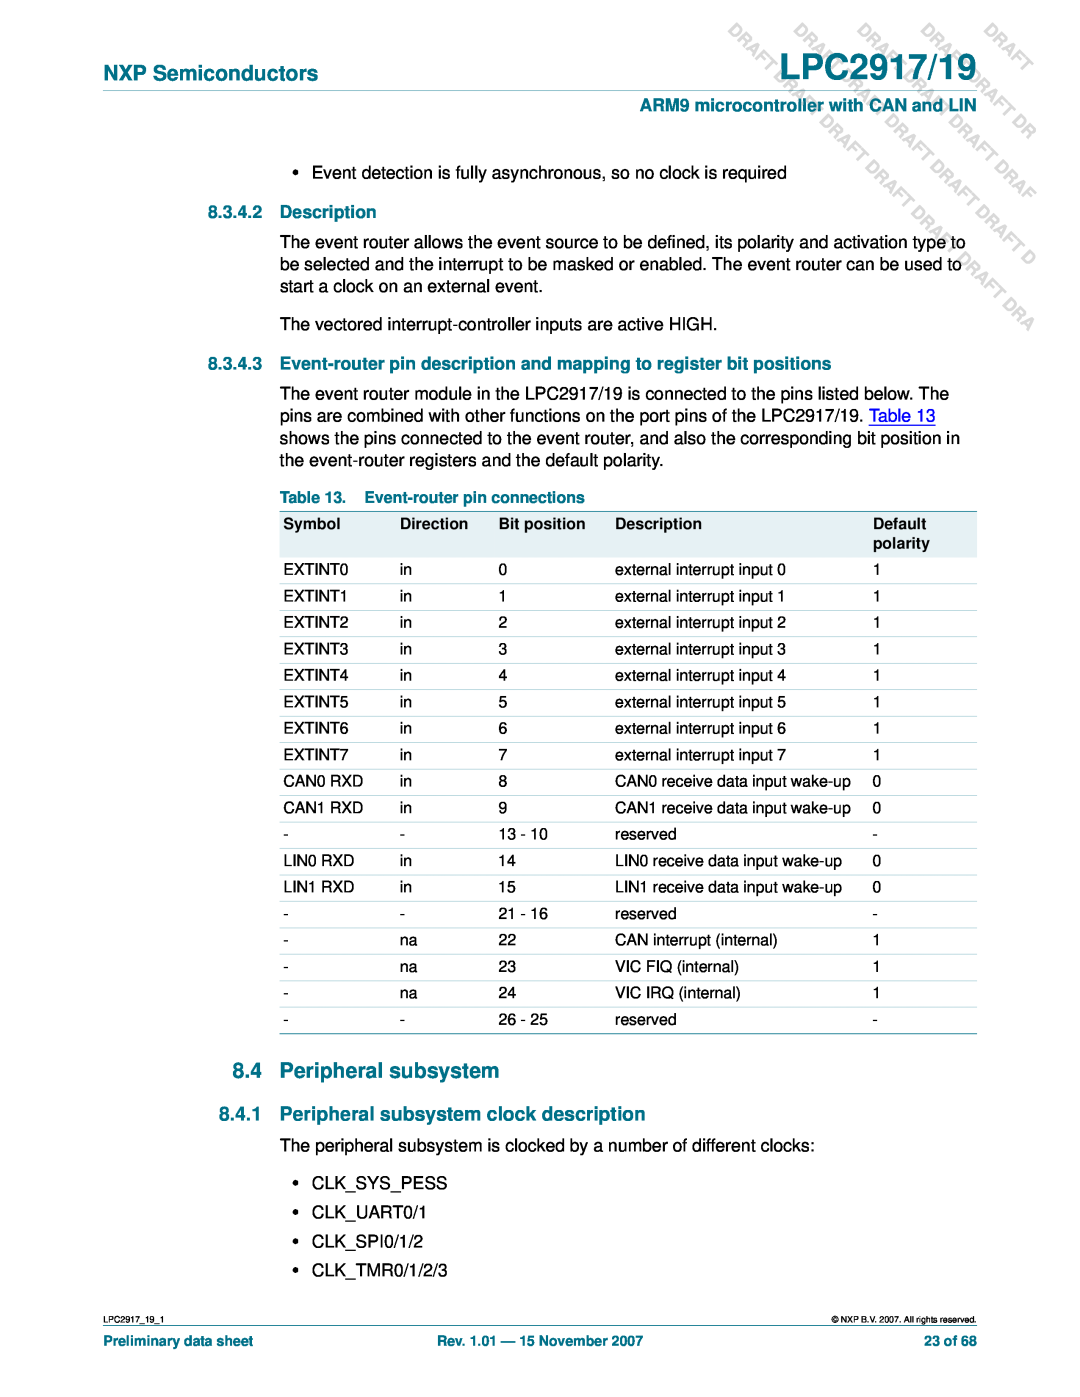 NXP Semiconductors LPC2919 user manual Peripheral subsystem clock description, DLPC2917/19 